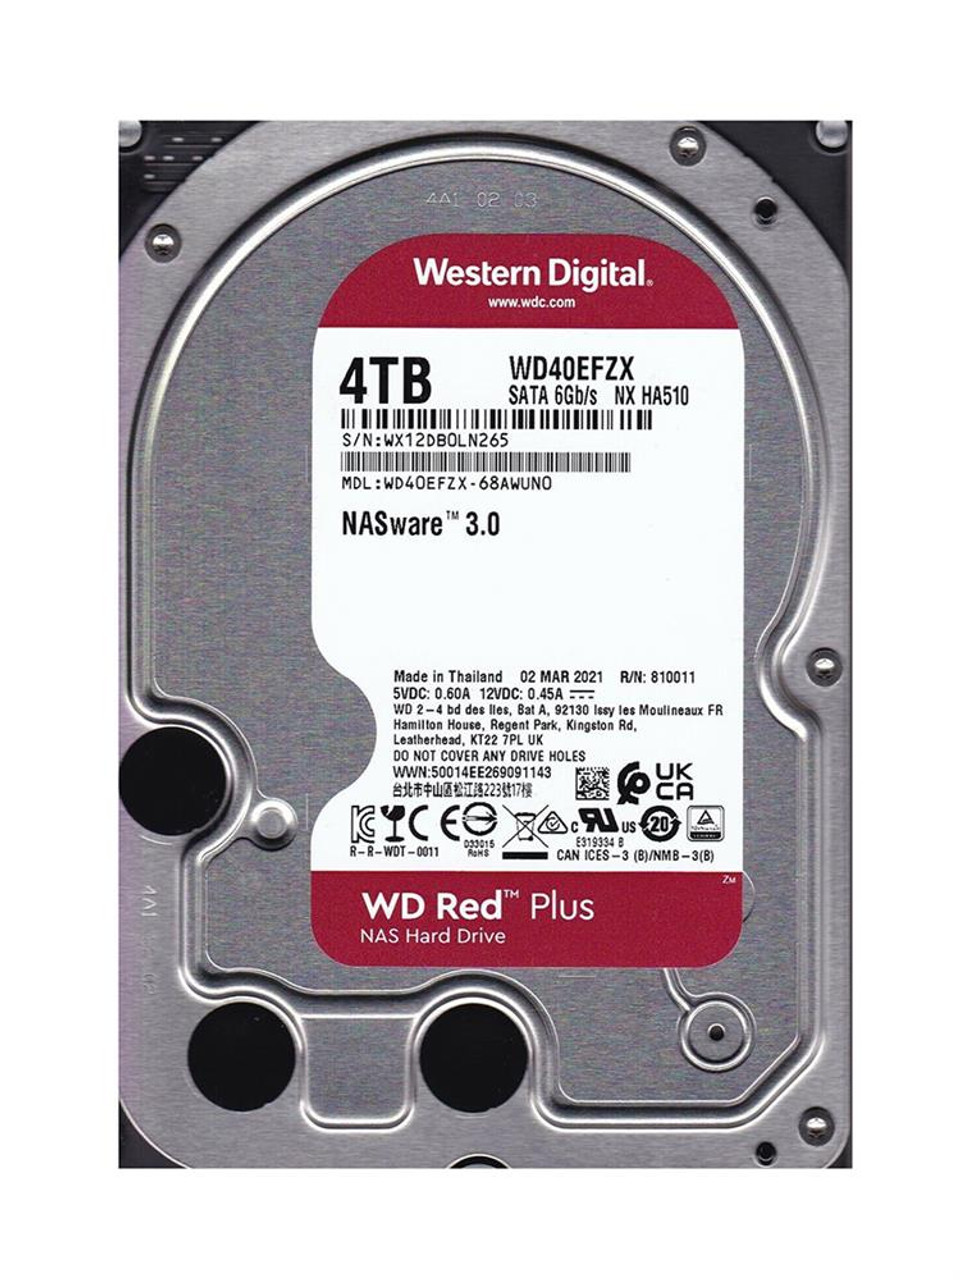 Western Digital Wd Red Plus 4TB SATA 3.5 6GB S Nx Ha510 Nas Hard Drive Bulk A2